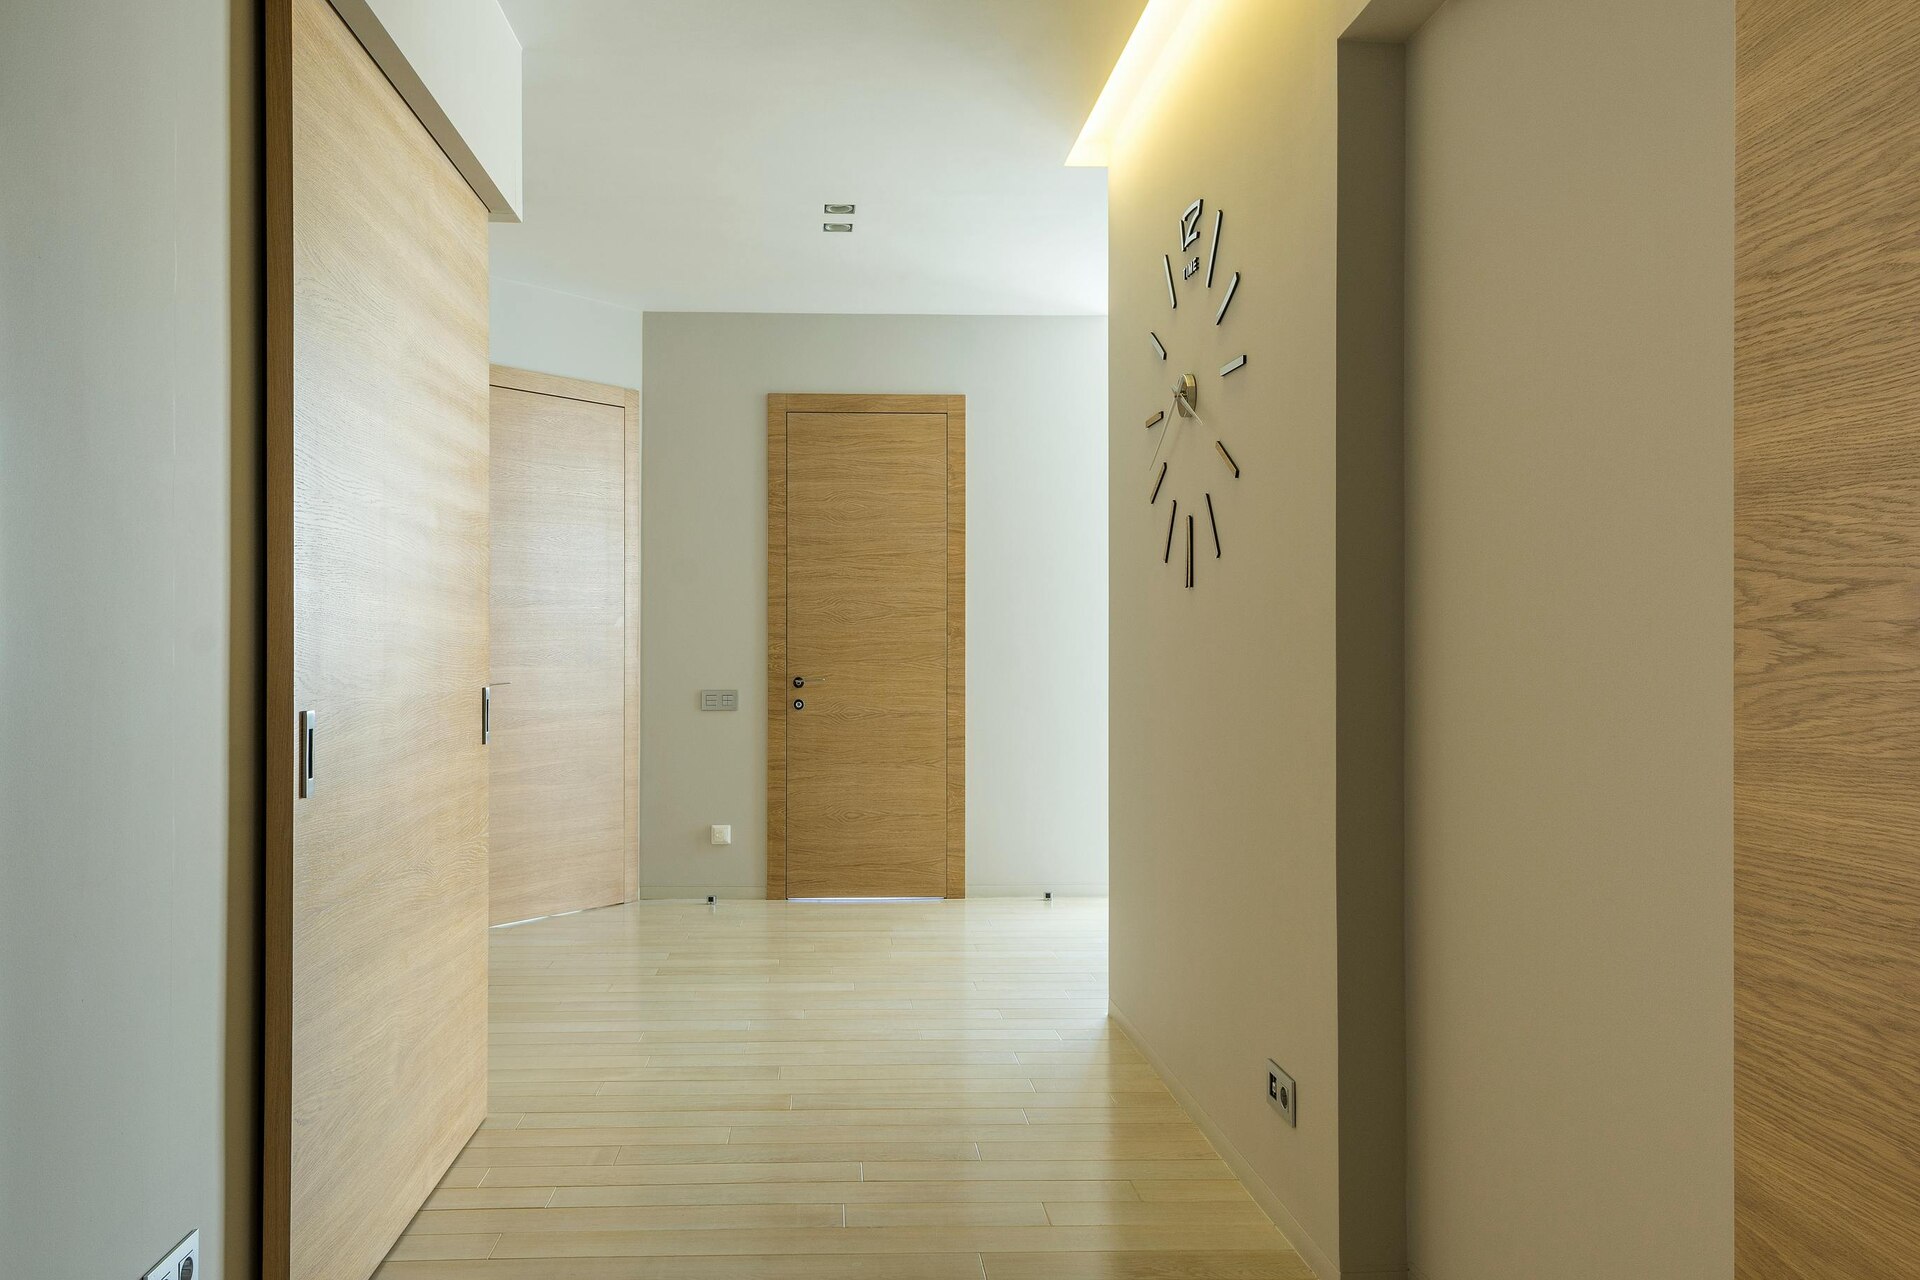 An empty hallway with a wooden floor